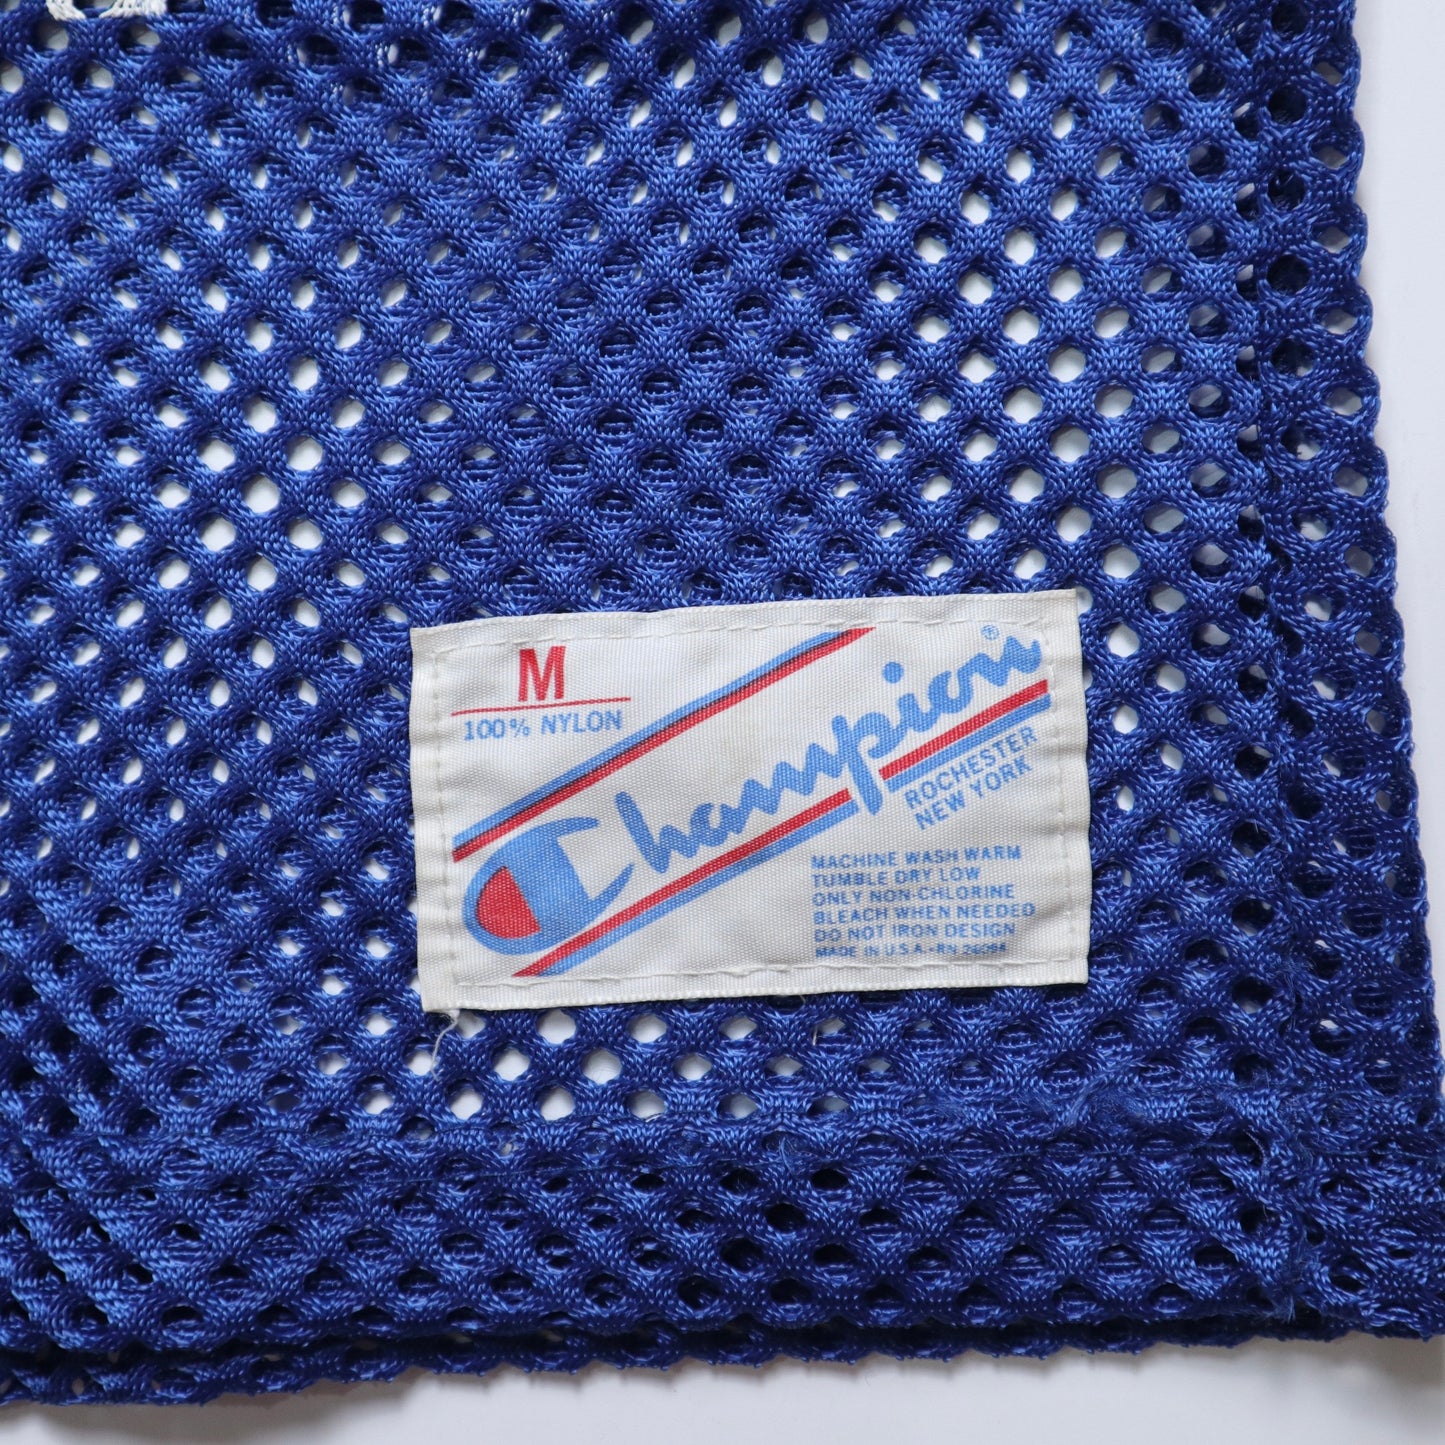 1980s Champion 美國製 Waterford Frosh 美式足球網洞上衣